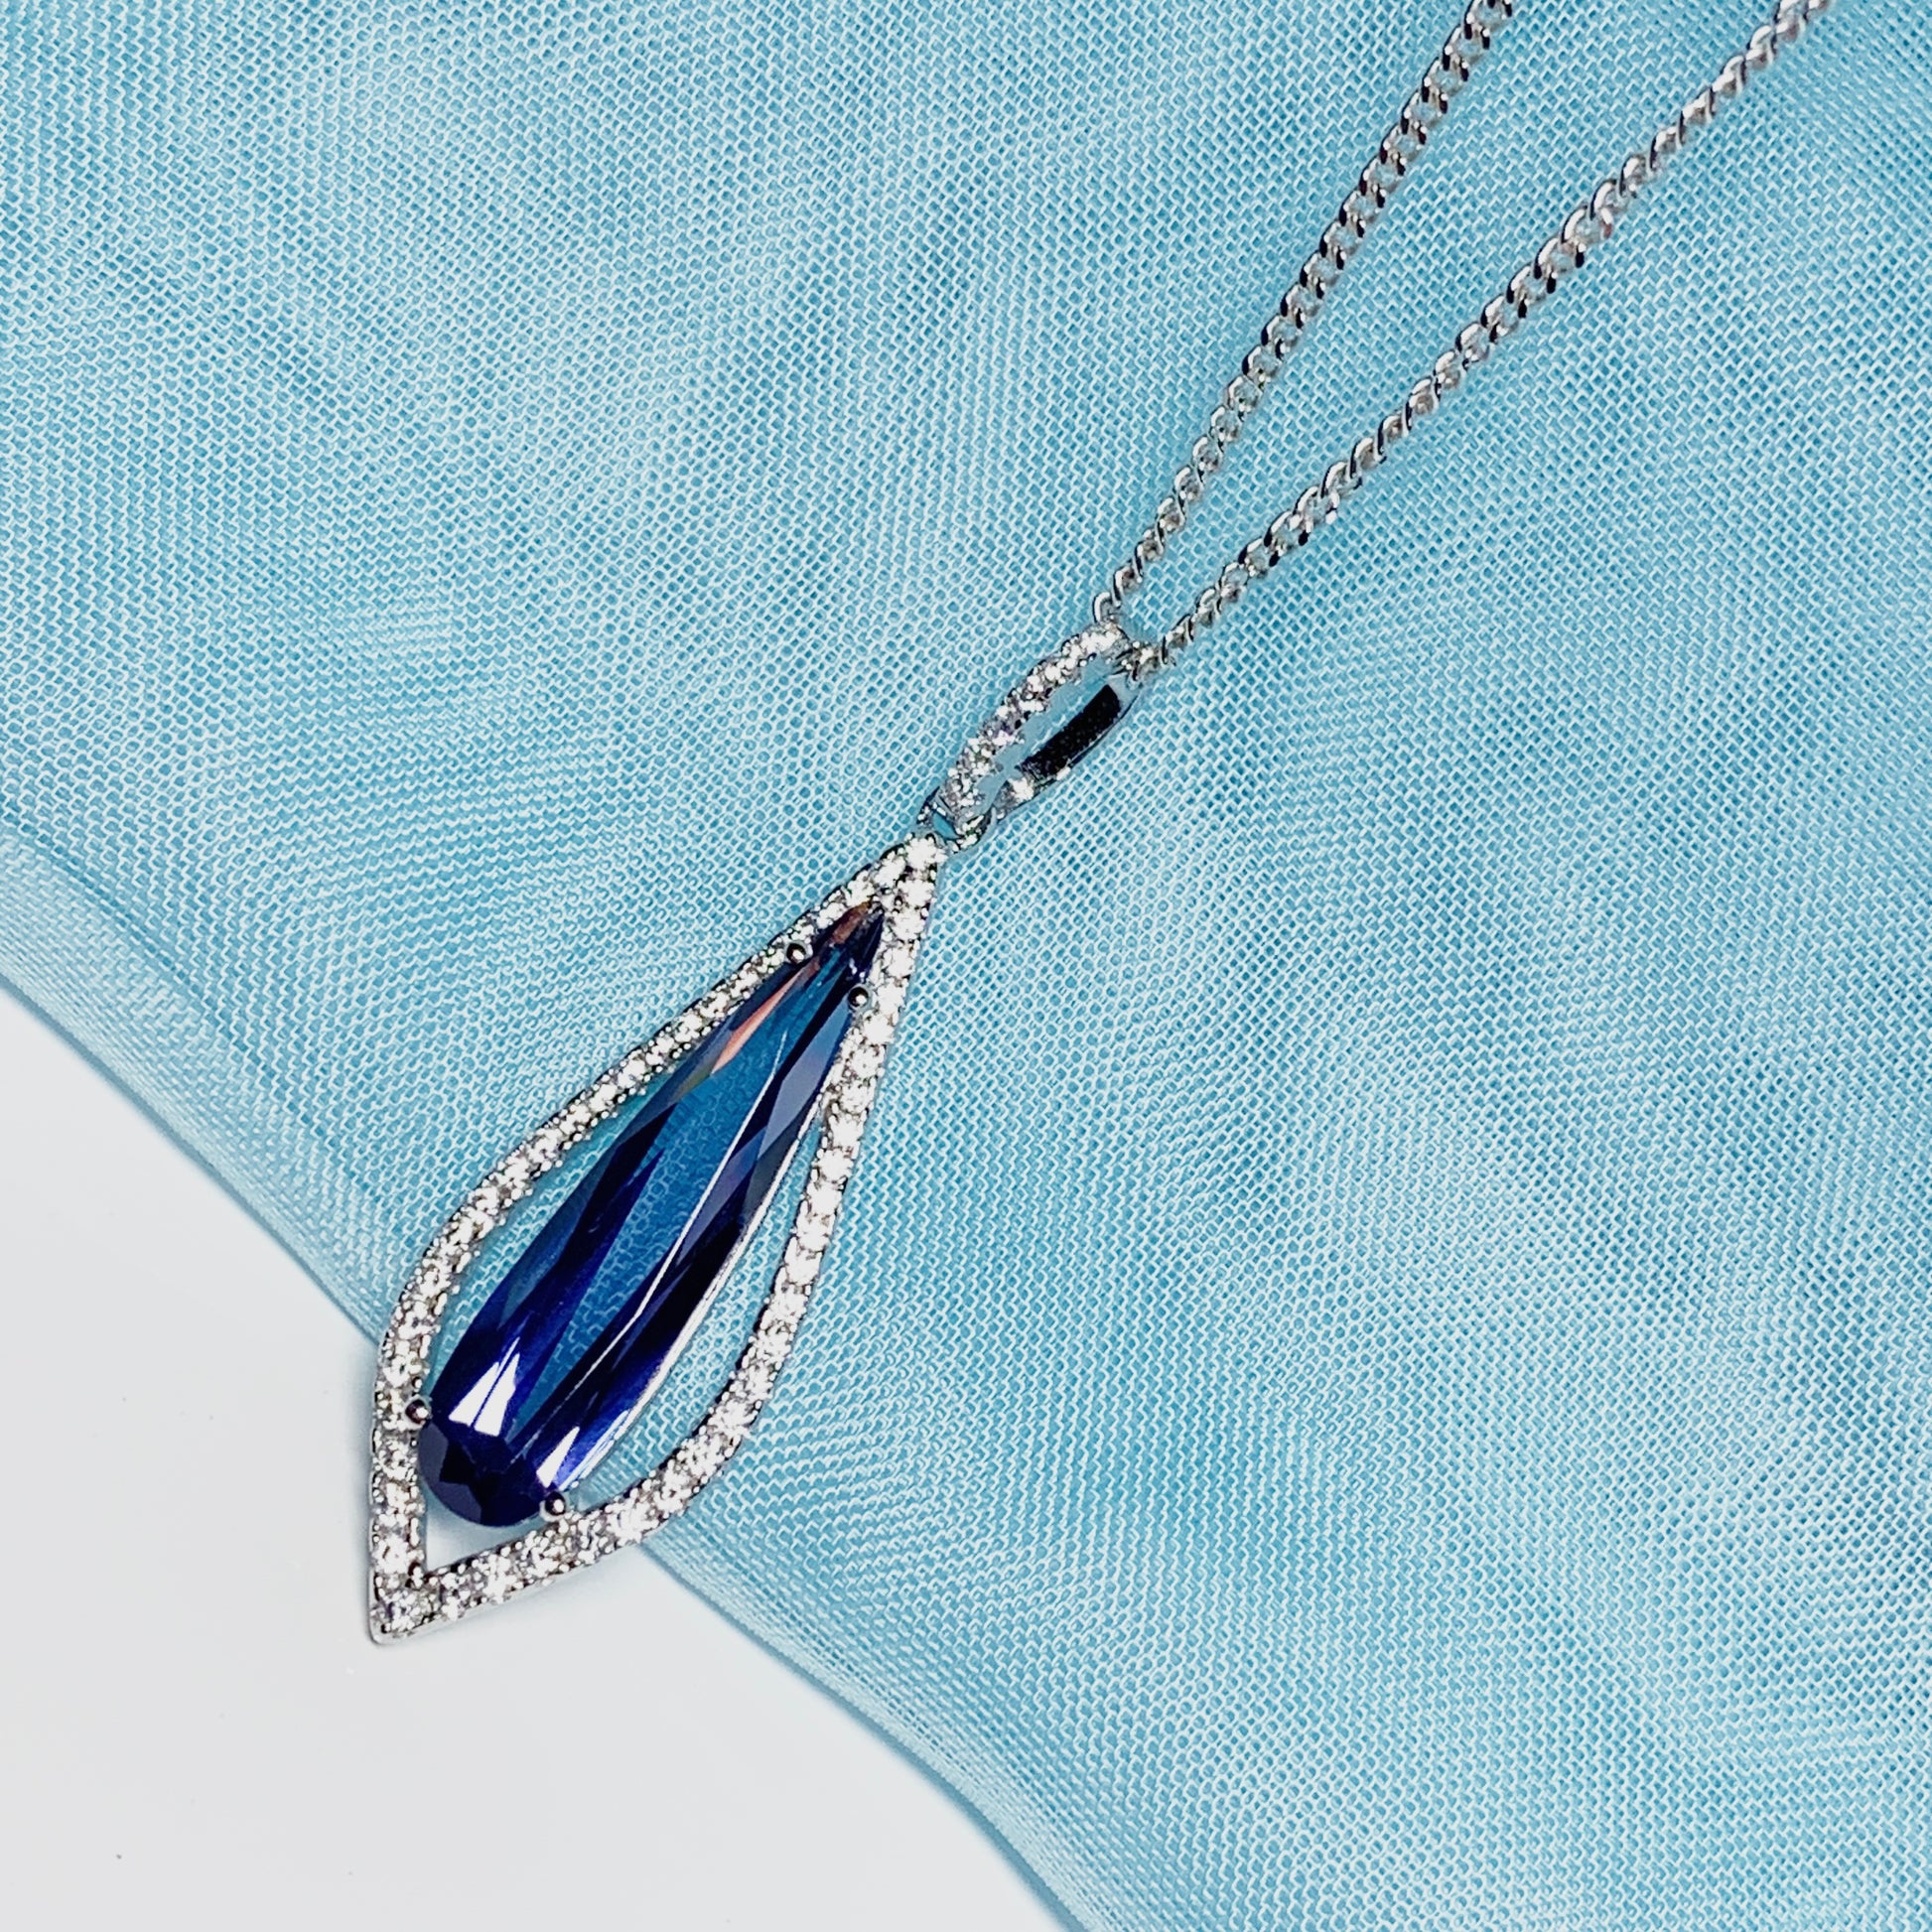 Blue long drop necklace pear shaped cubic zirconia silver cluster pendant